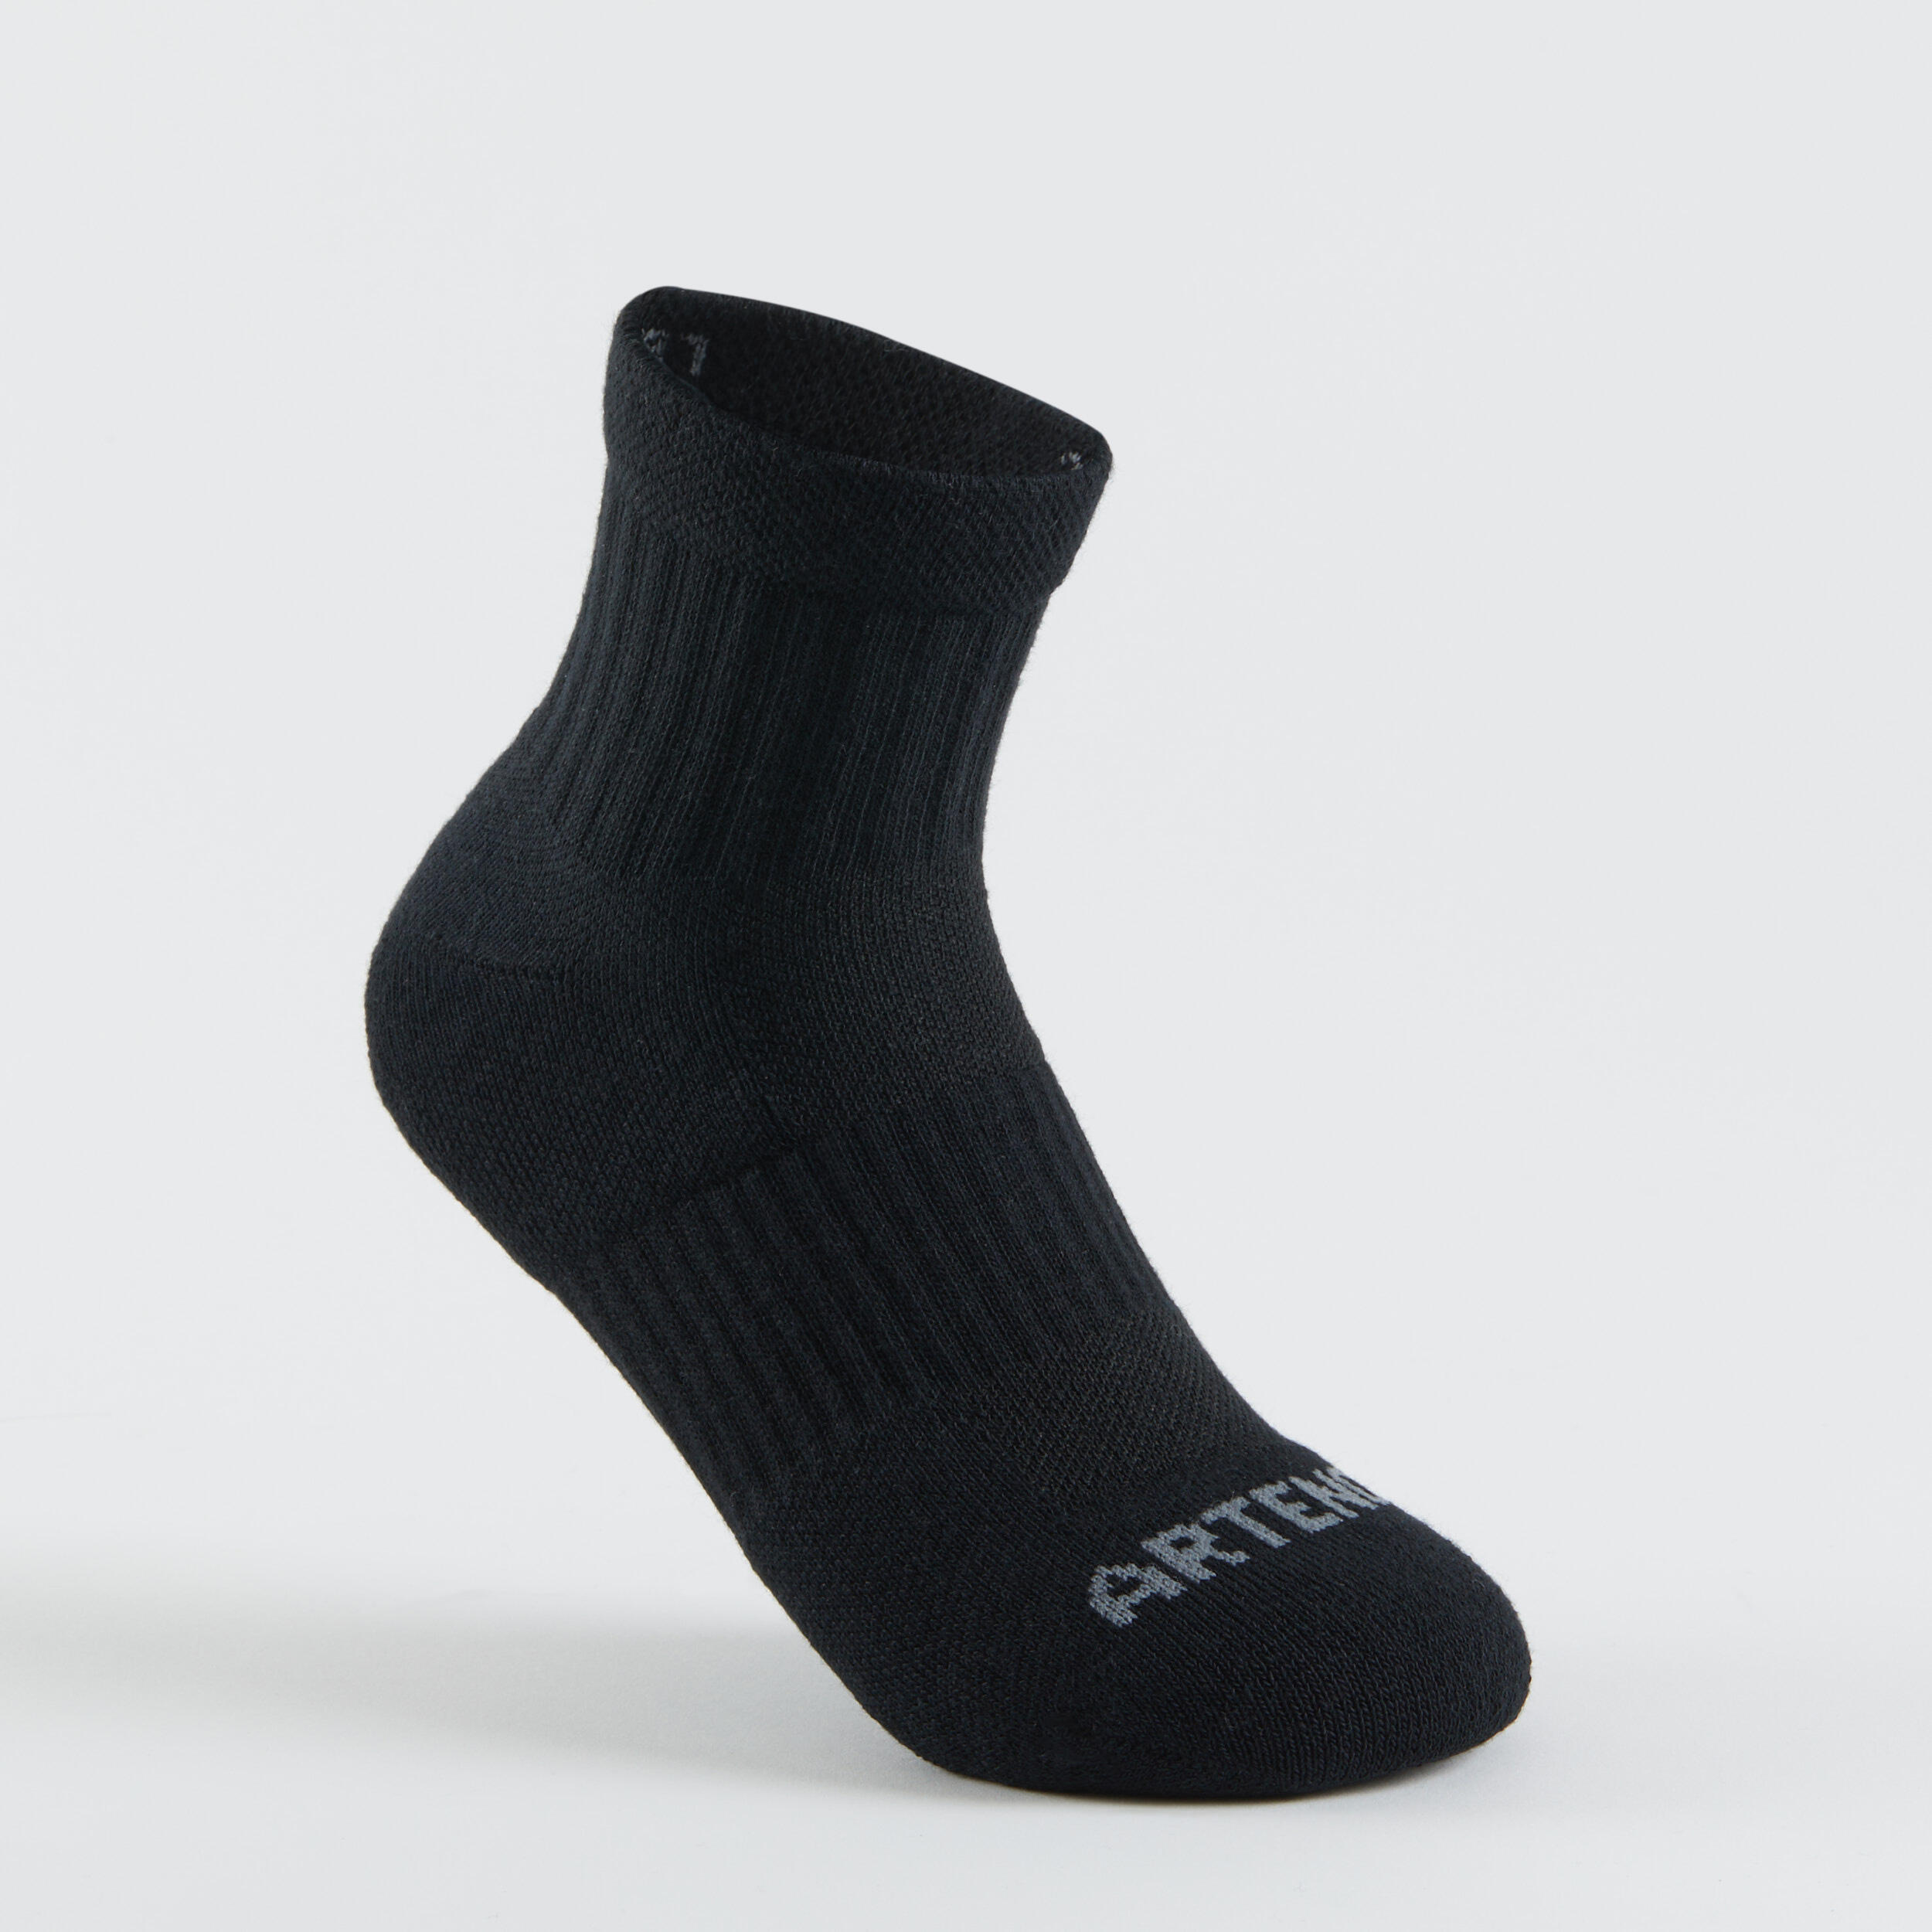 RS500 sports socks - Kids - smoked black - Artengo - Decathlon